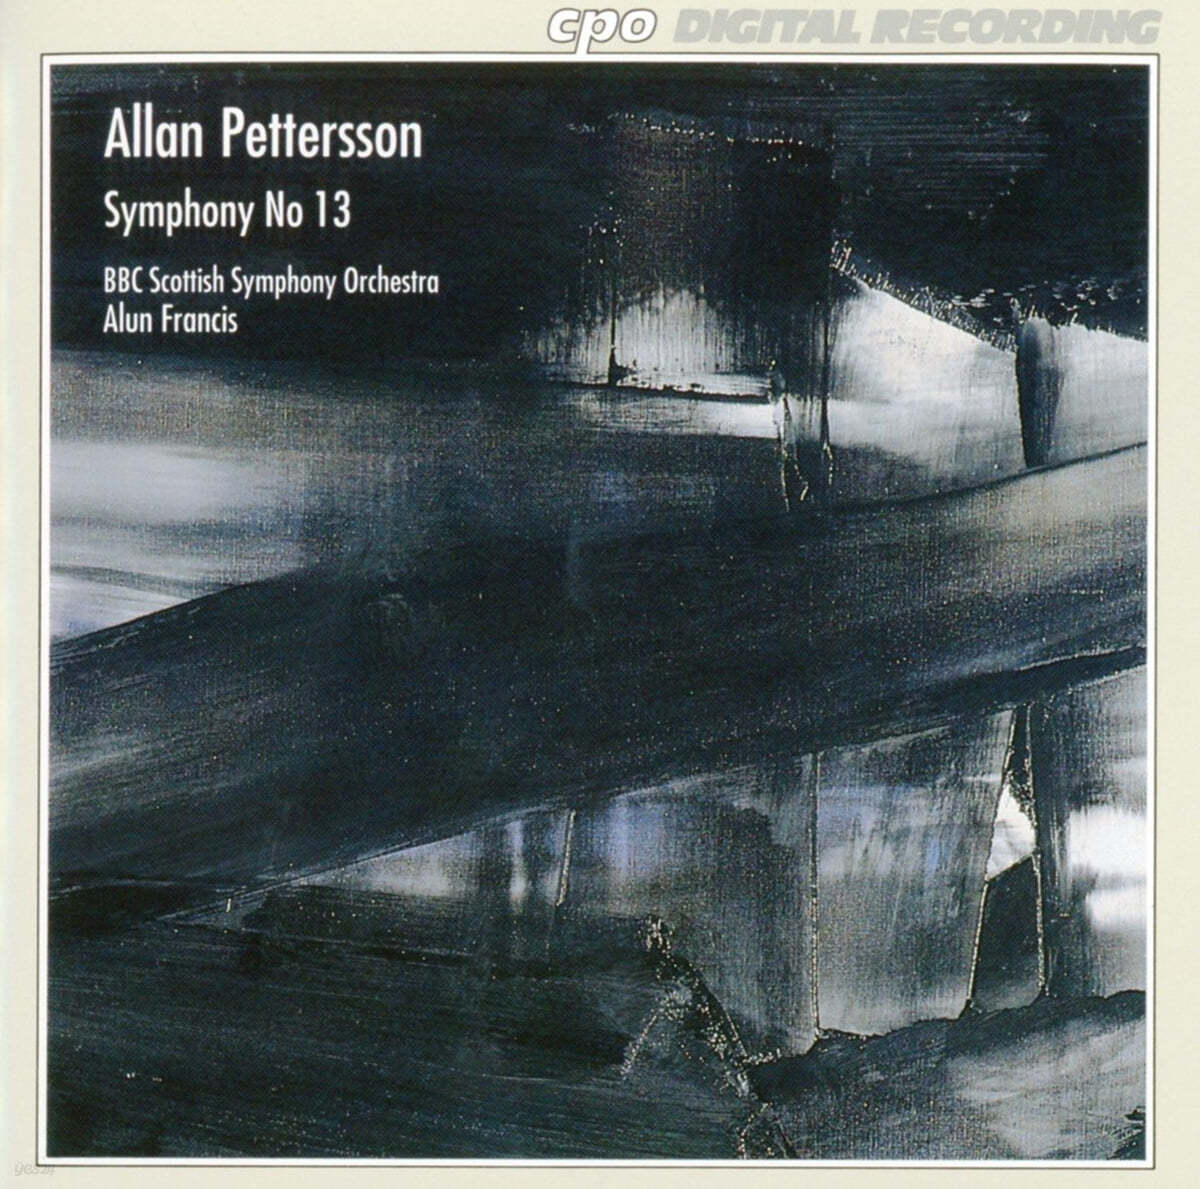 Alun Francis 피터슨: 교향곡 13번 (Allan Pettersson: Symphony No.13) 